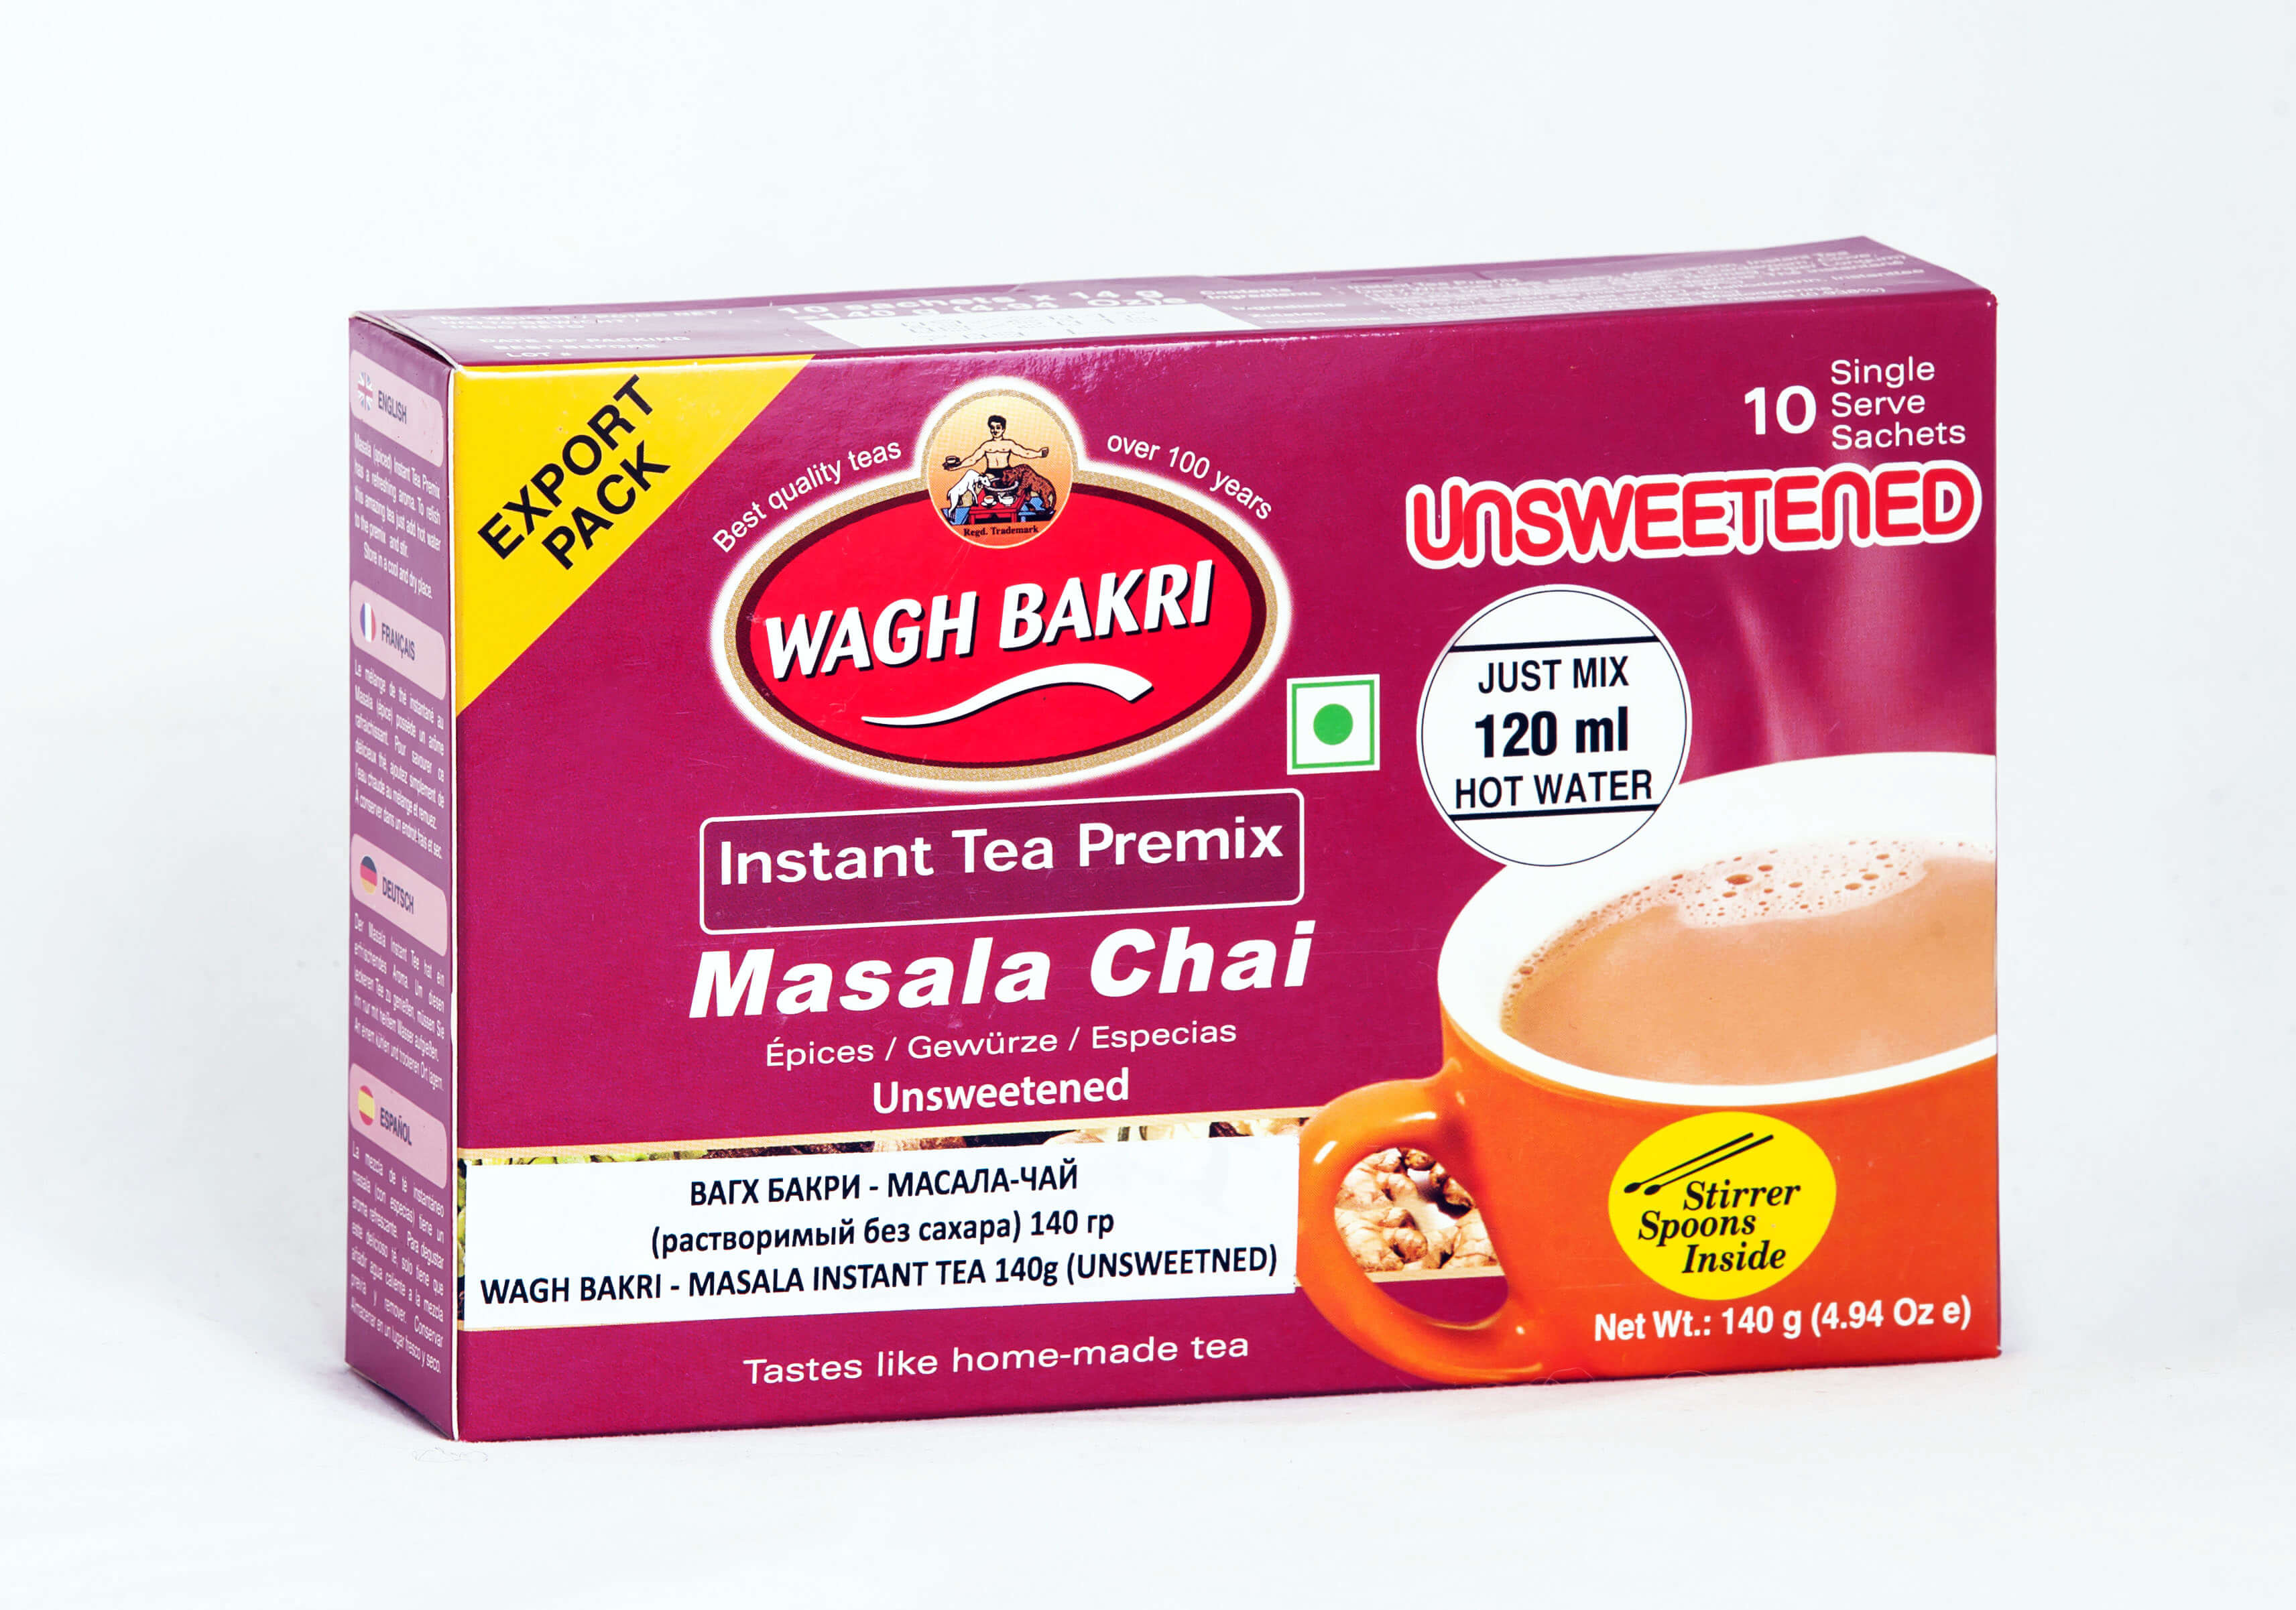 ВАГХ БАКРИ-Растворимый Масала чай 140гбез сахара/WAGH BAKRI-Masala unsweetened instant tea 140g